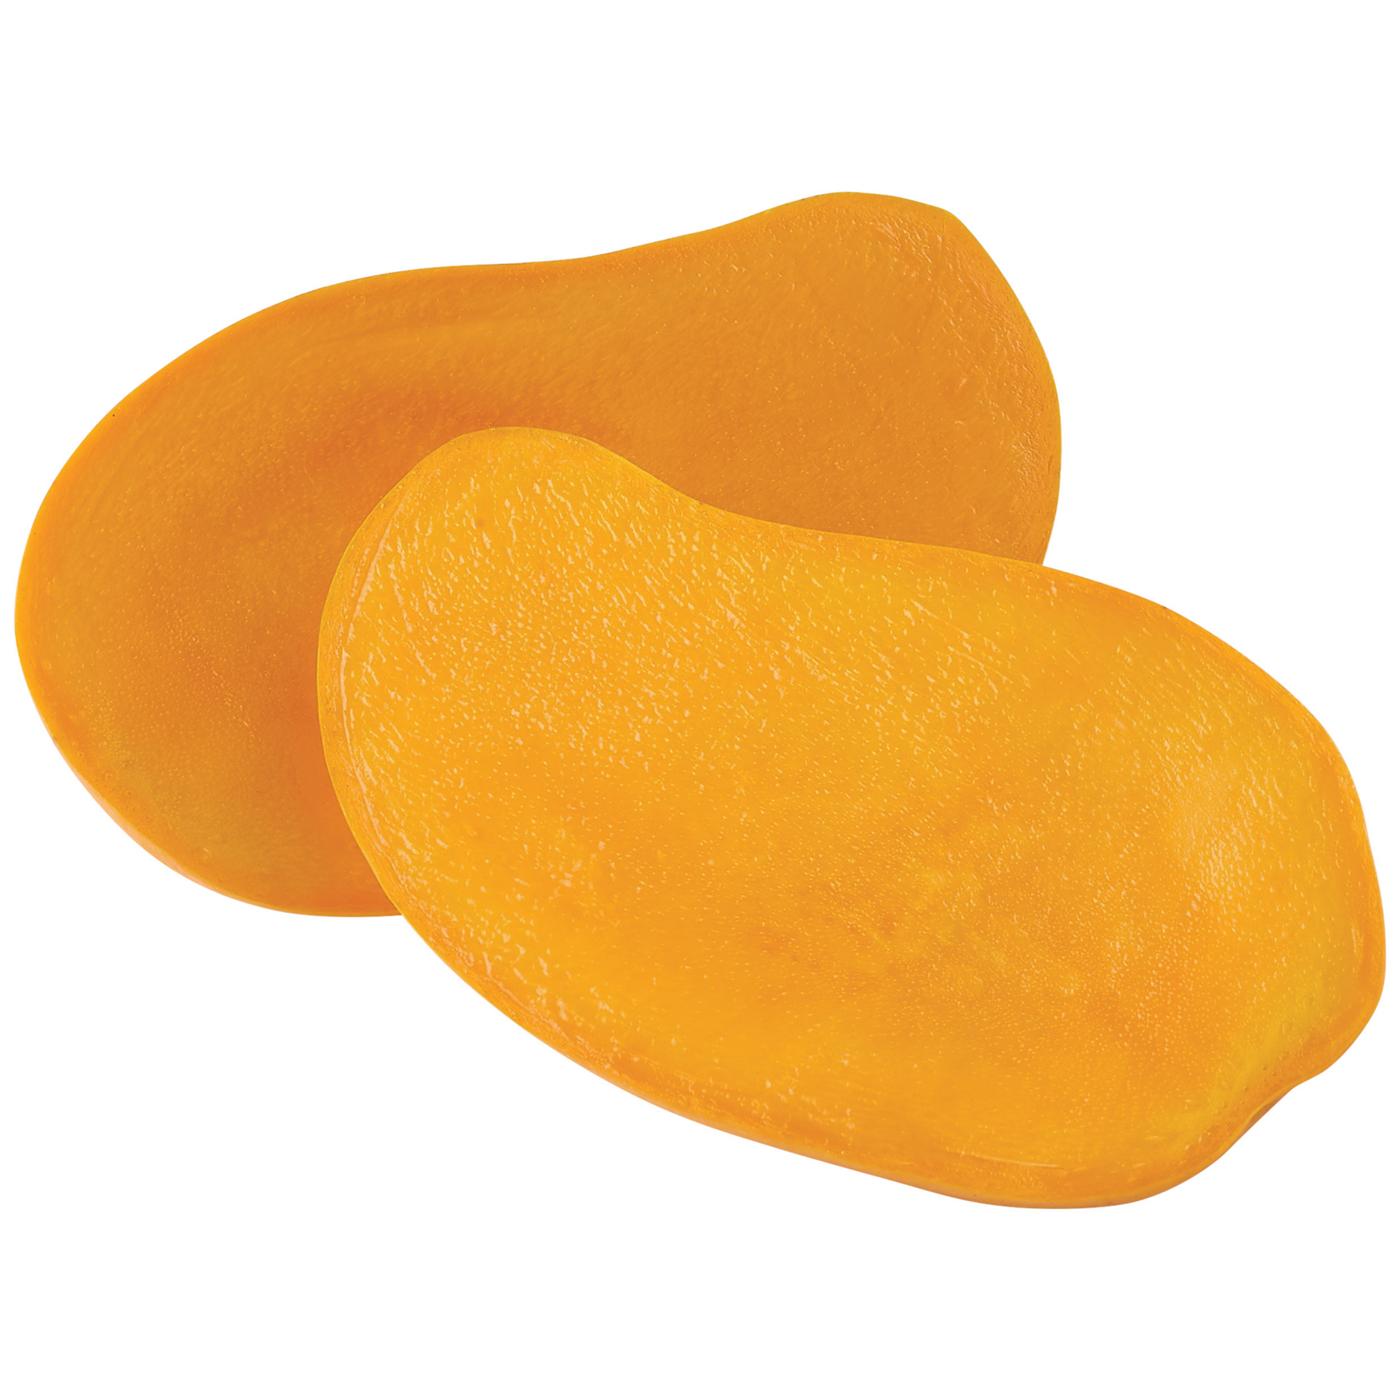 Fresh Small Ataulfo Mango; image 2 of 4